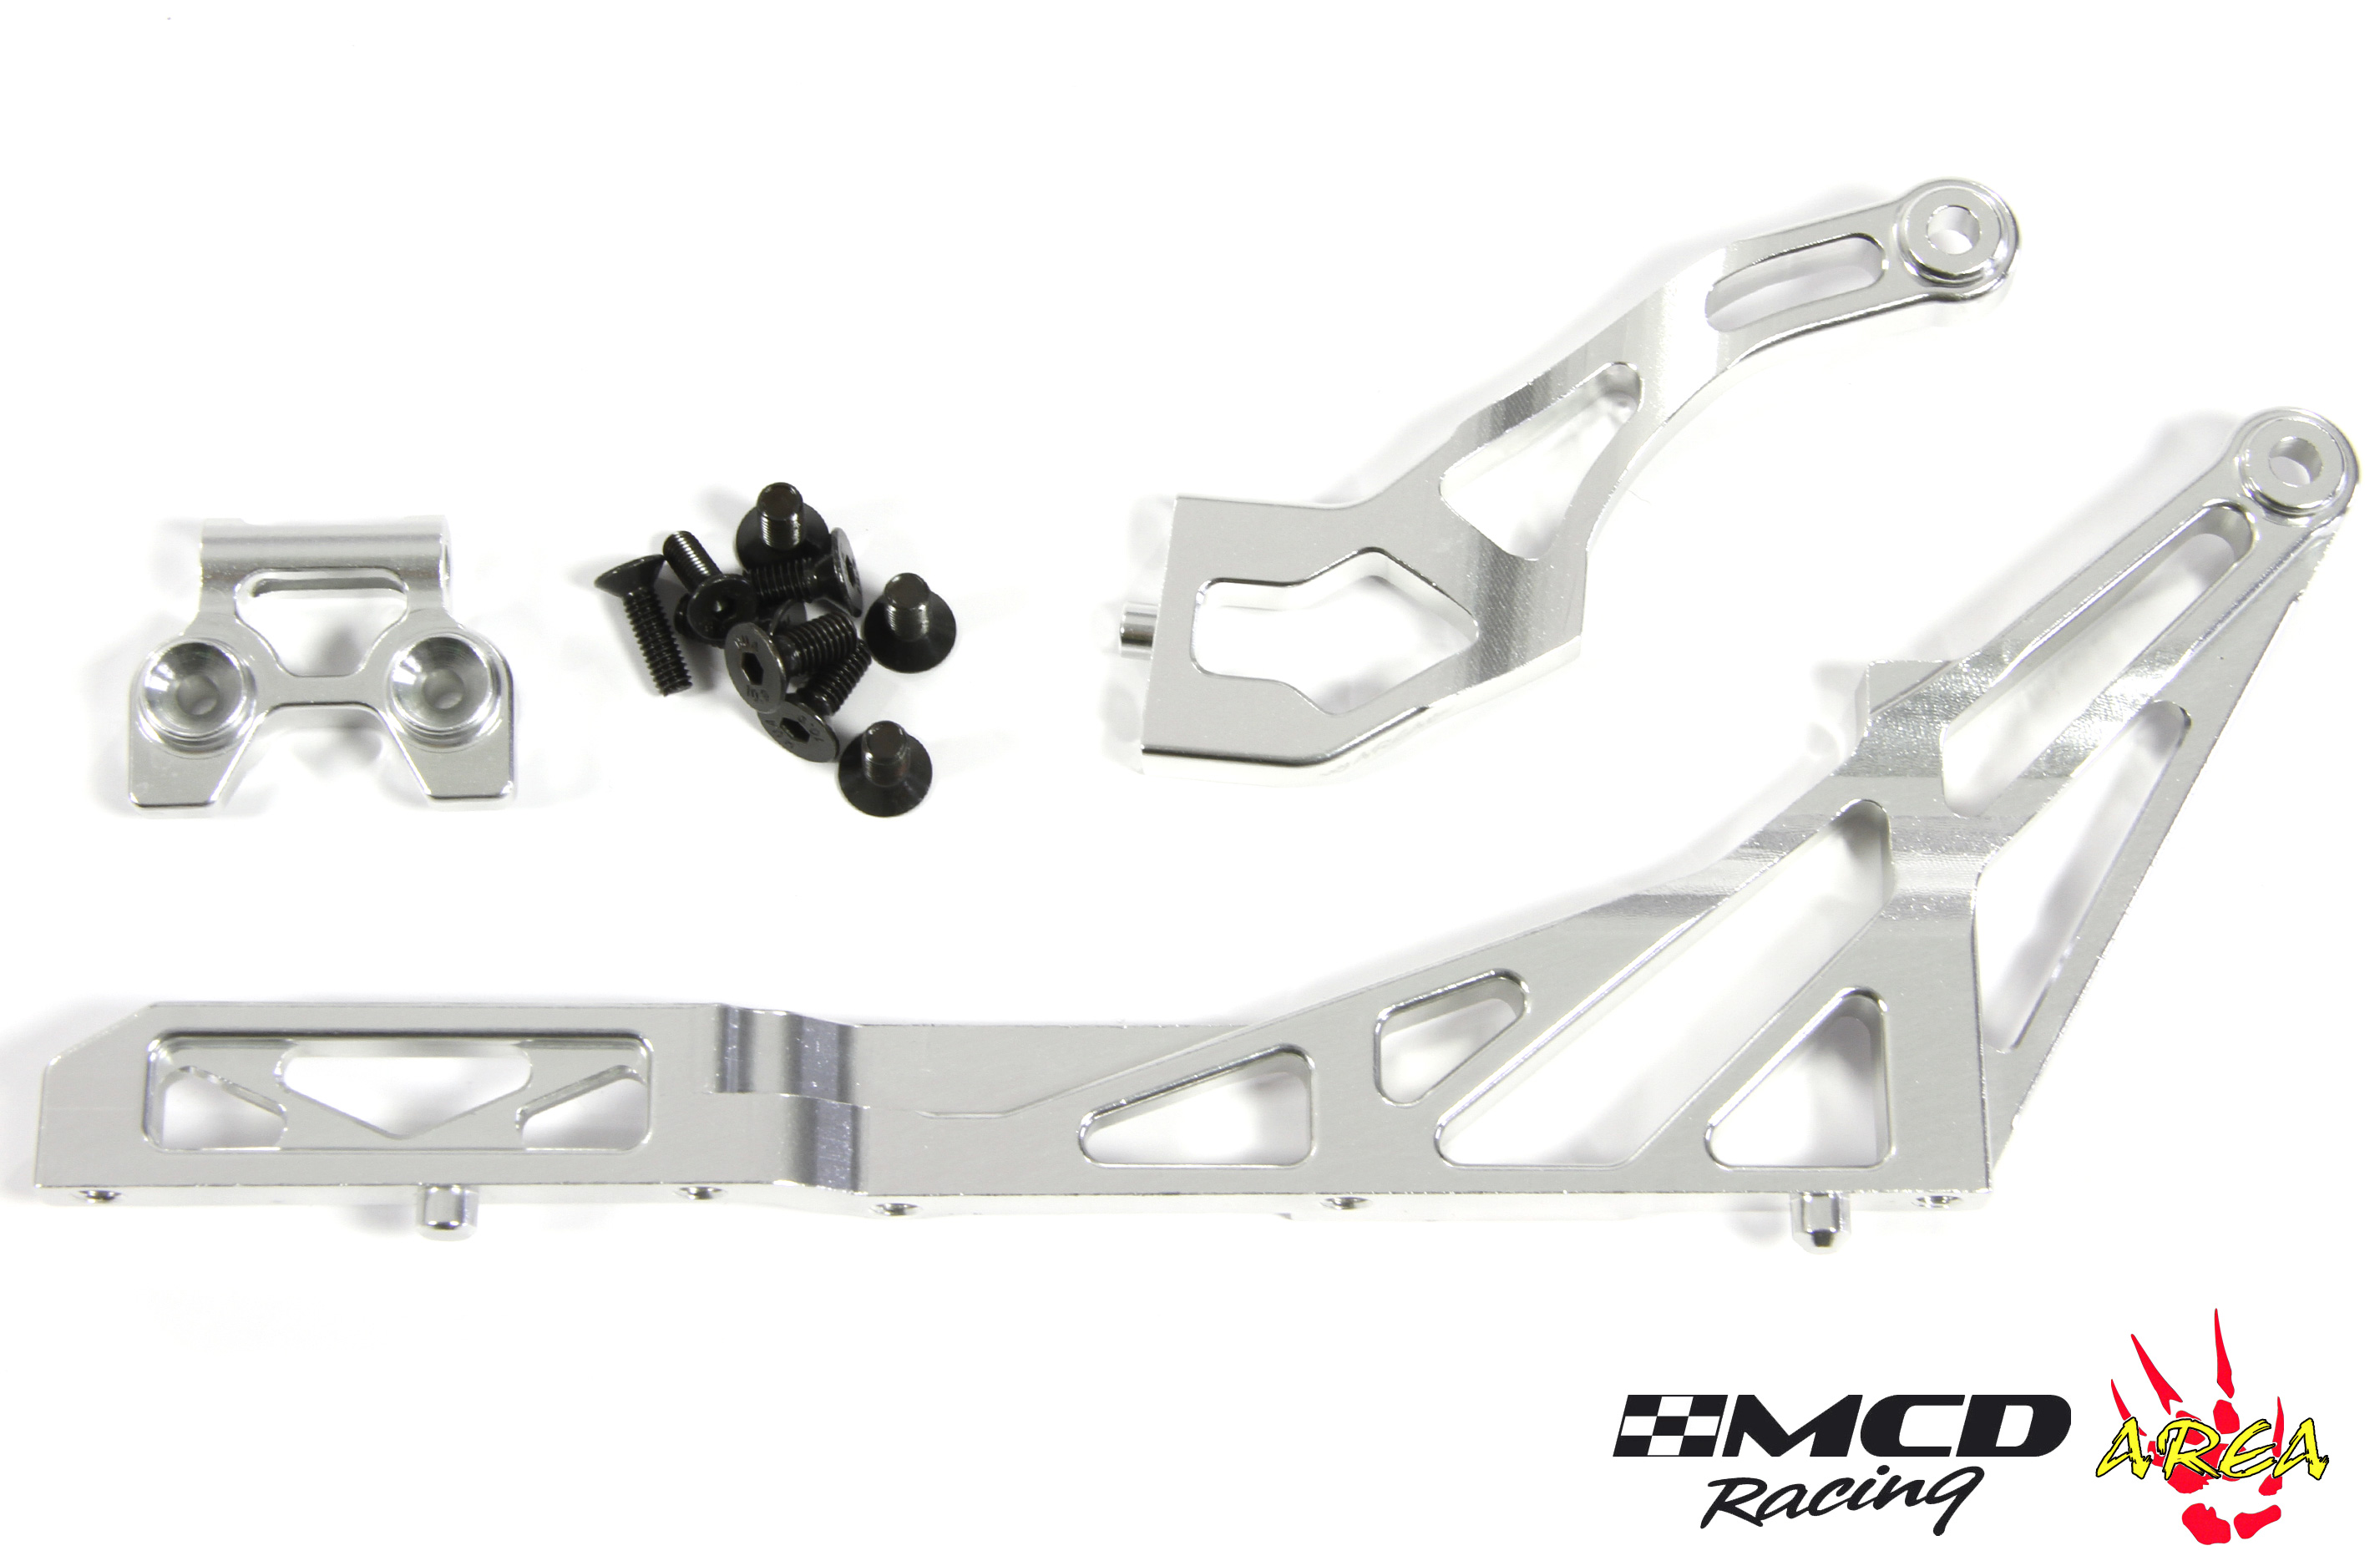 AREA-MCD-006 Aluminum rear chassis brace set for MCD RR5/XS5